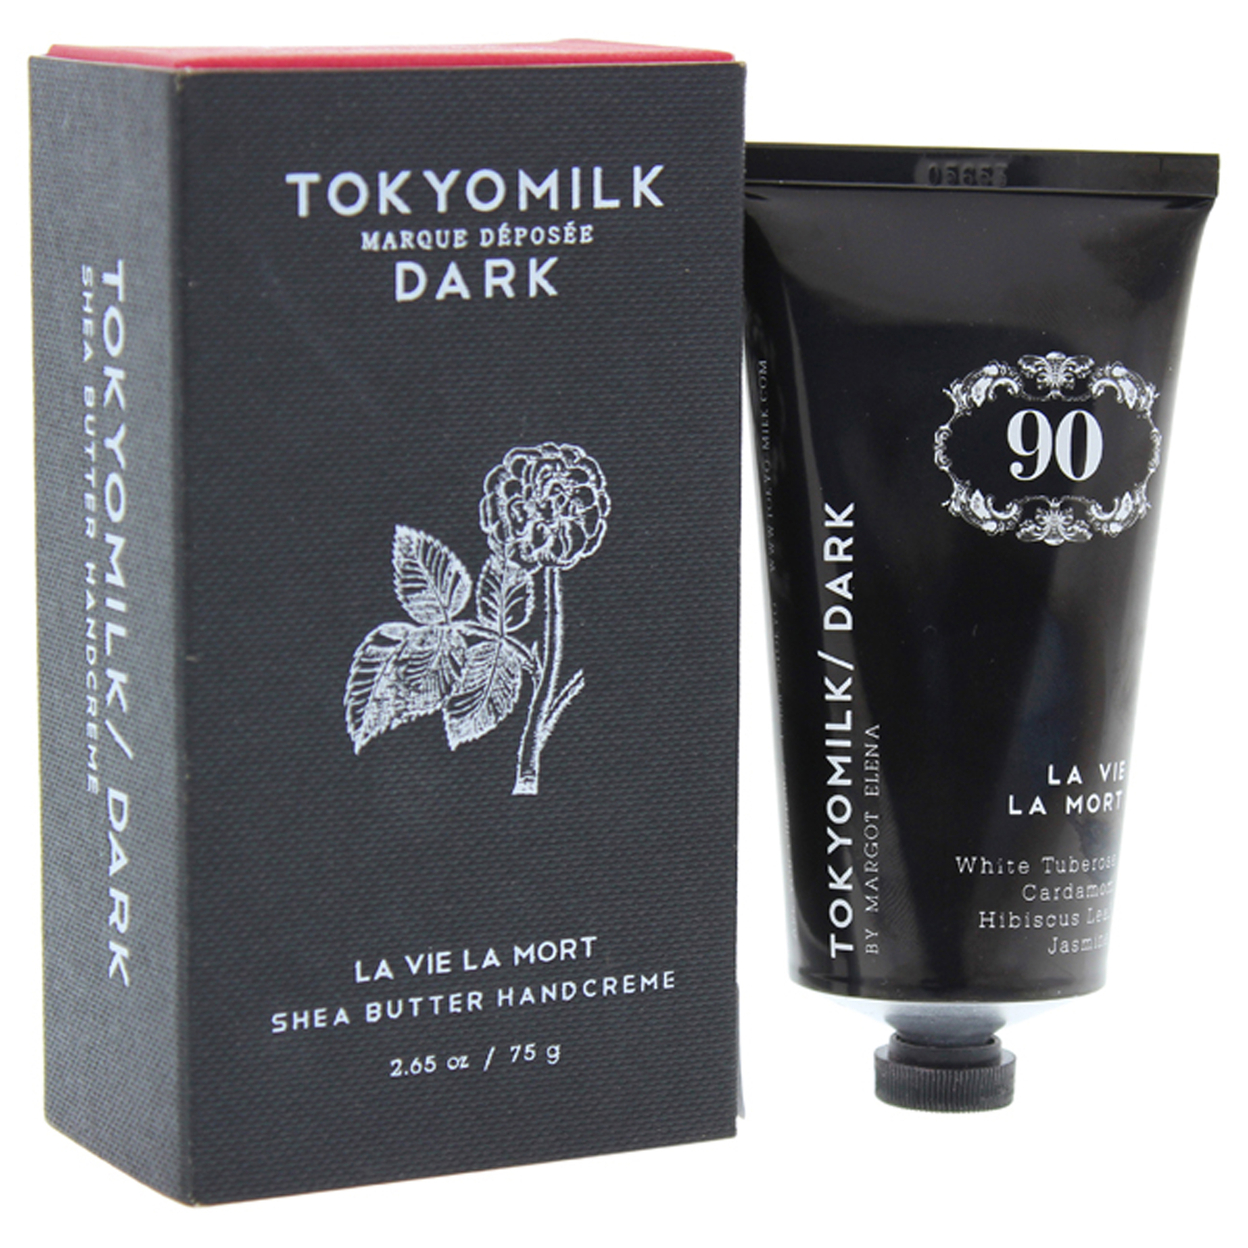 TokyoMilk Dark Shea Butter Hand Cream - 90 La Vie La Mort 2.65 Oz